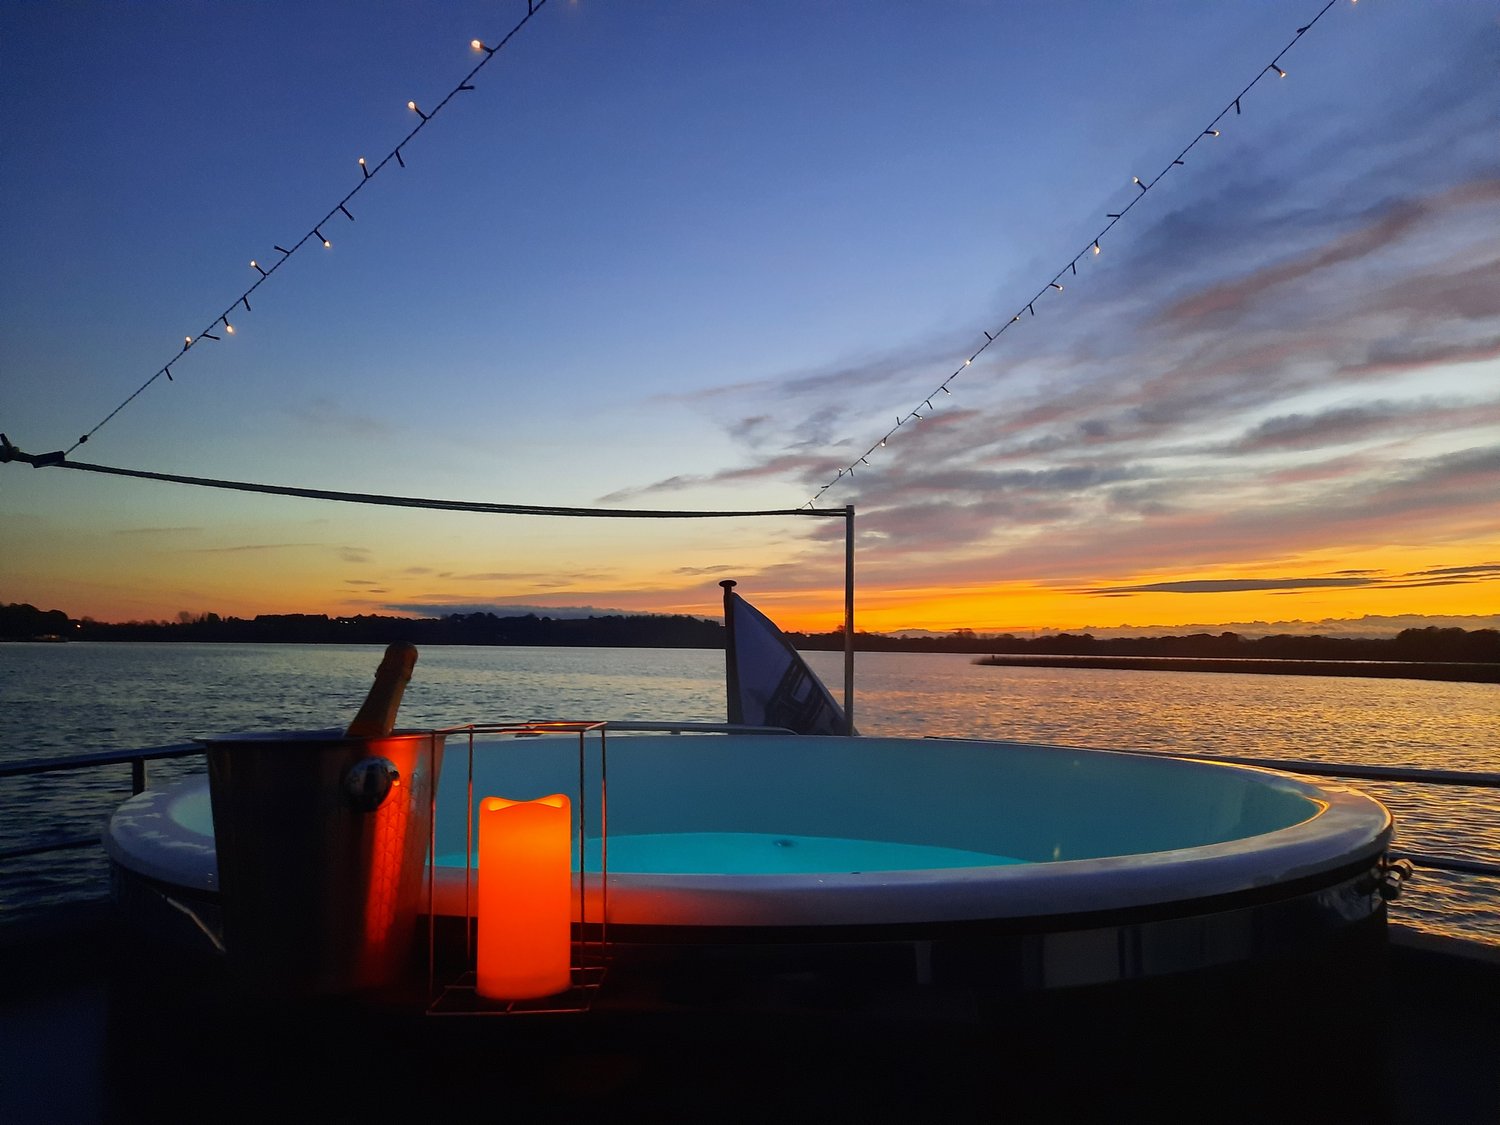 Hot Tub Boat sunset